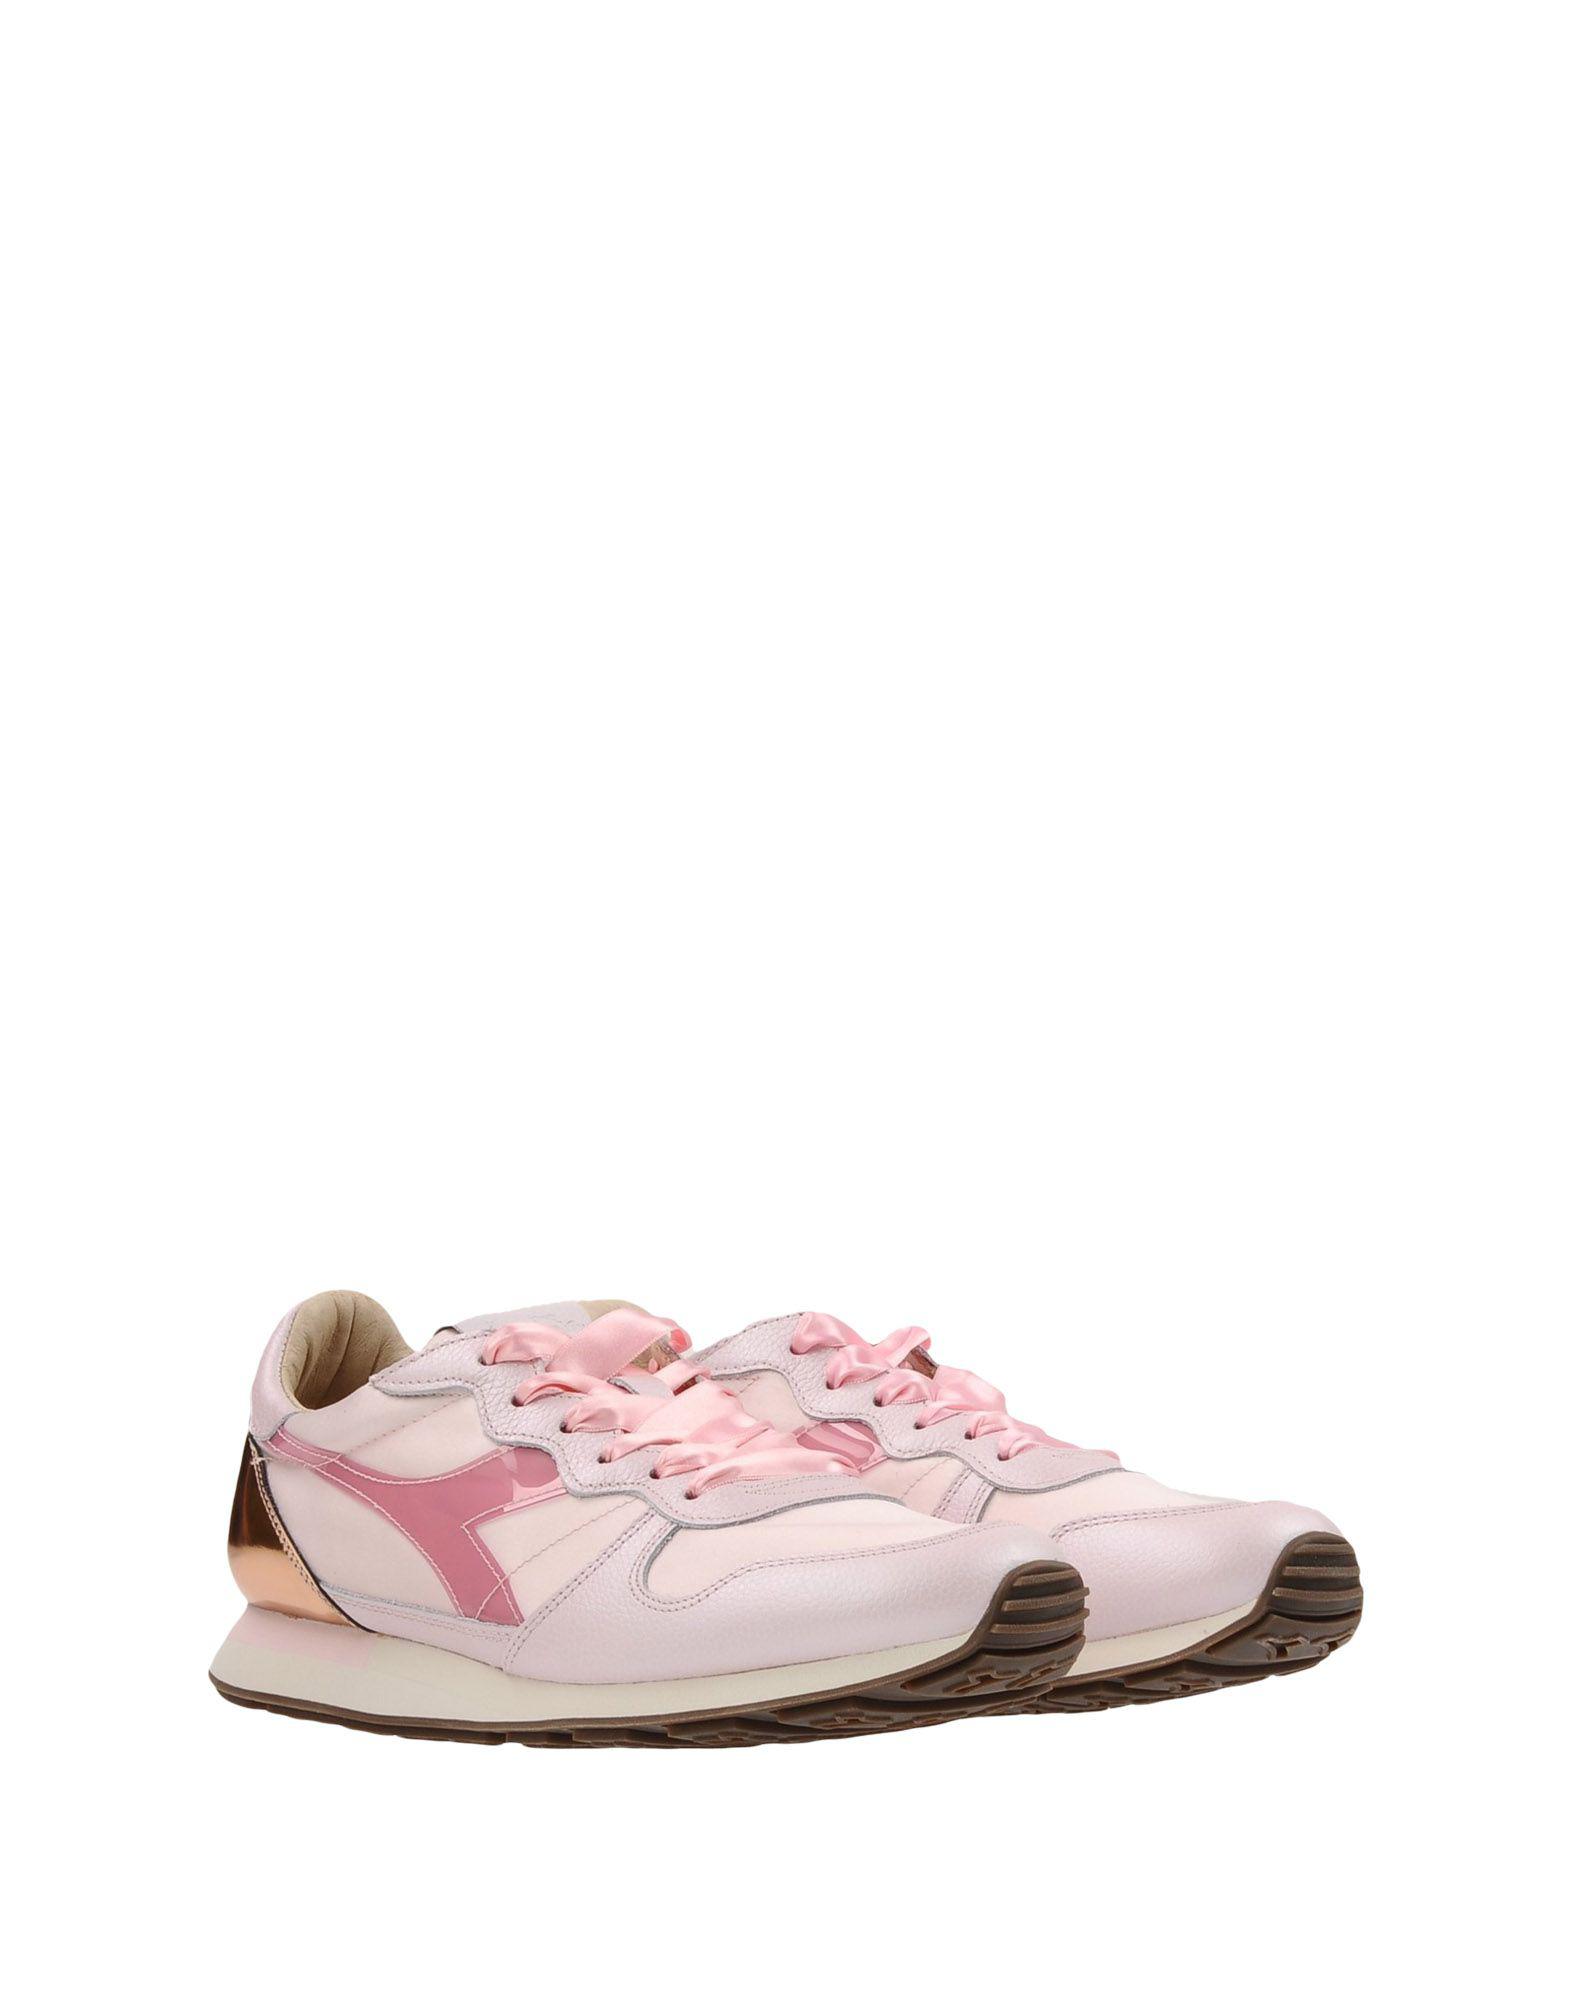 Diadora Satin Low-tops & Sneakers in Light Pink (Pink) - Lyst